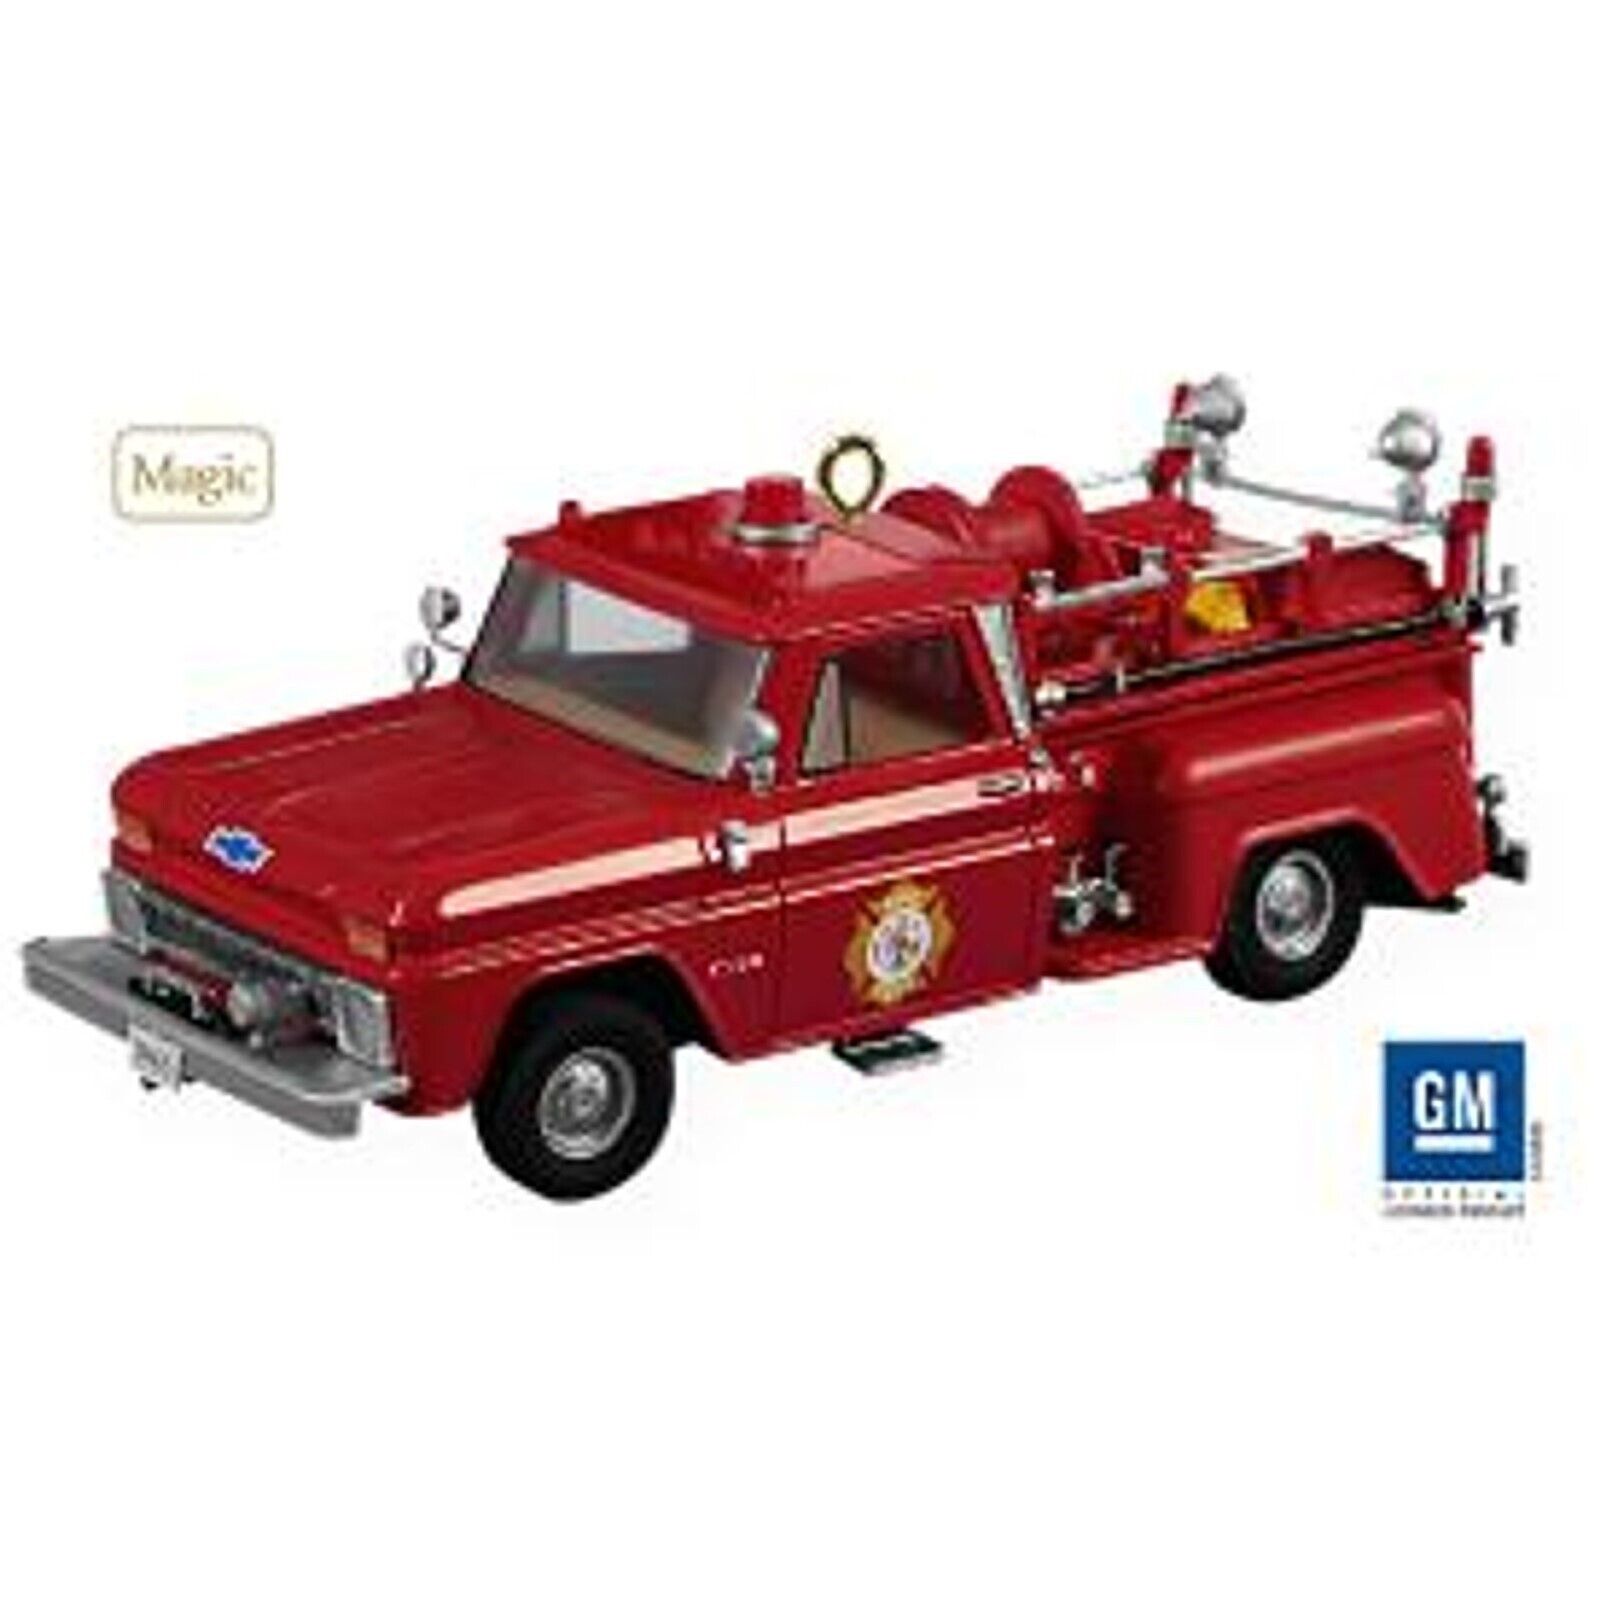 '1965 Chevrolet Fire Engine' 'Fire Brigade' Series NEW Hallmark 2009 Ornament